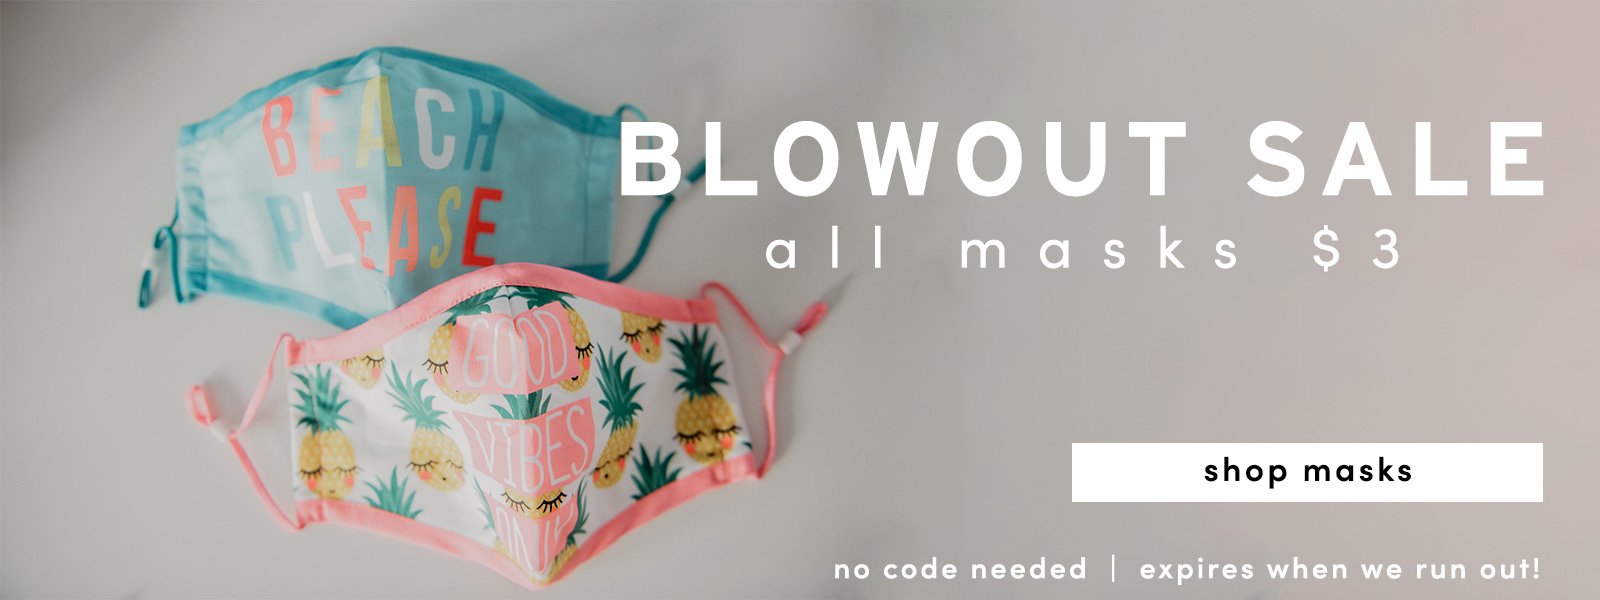 blowout sale all masks $3